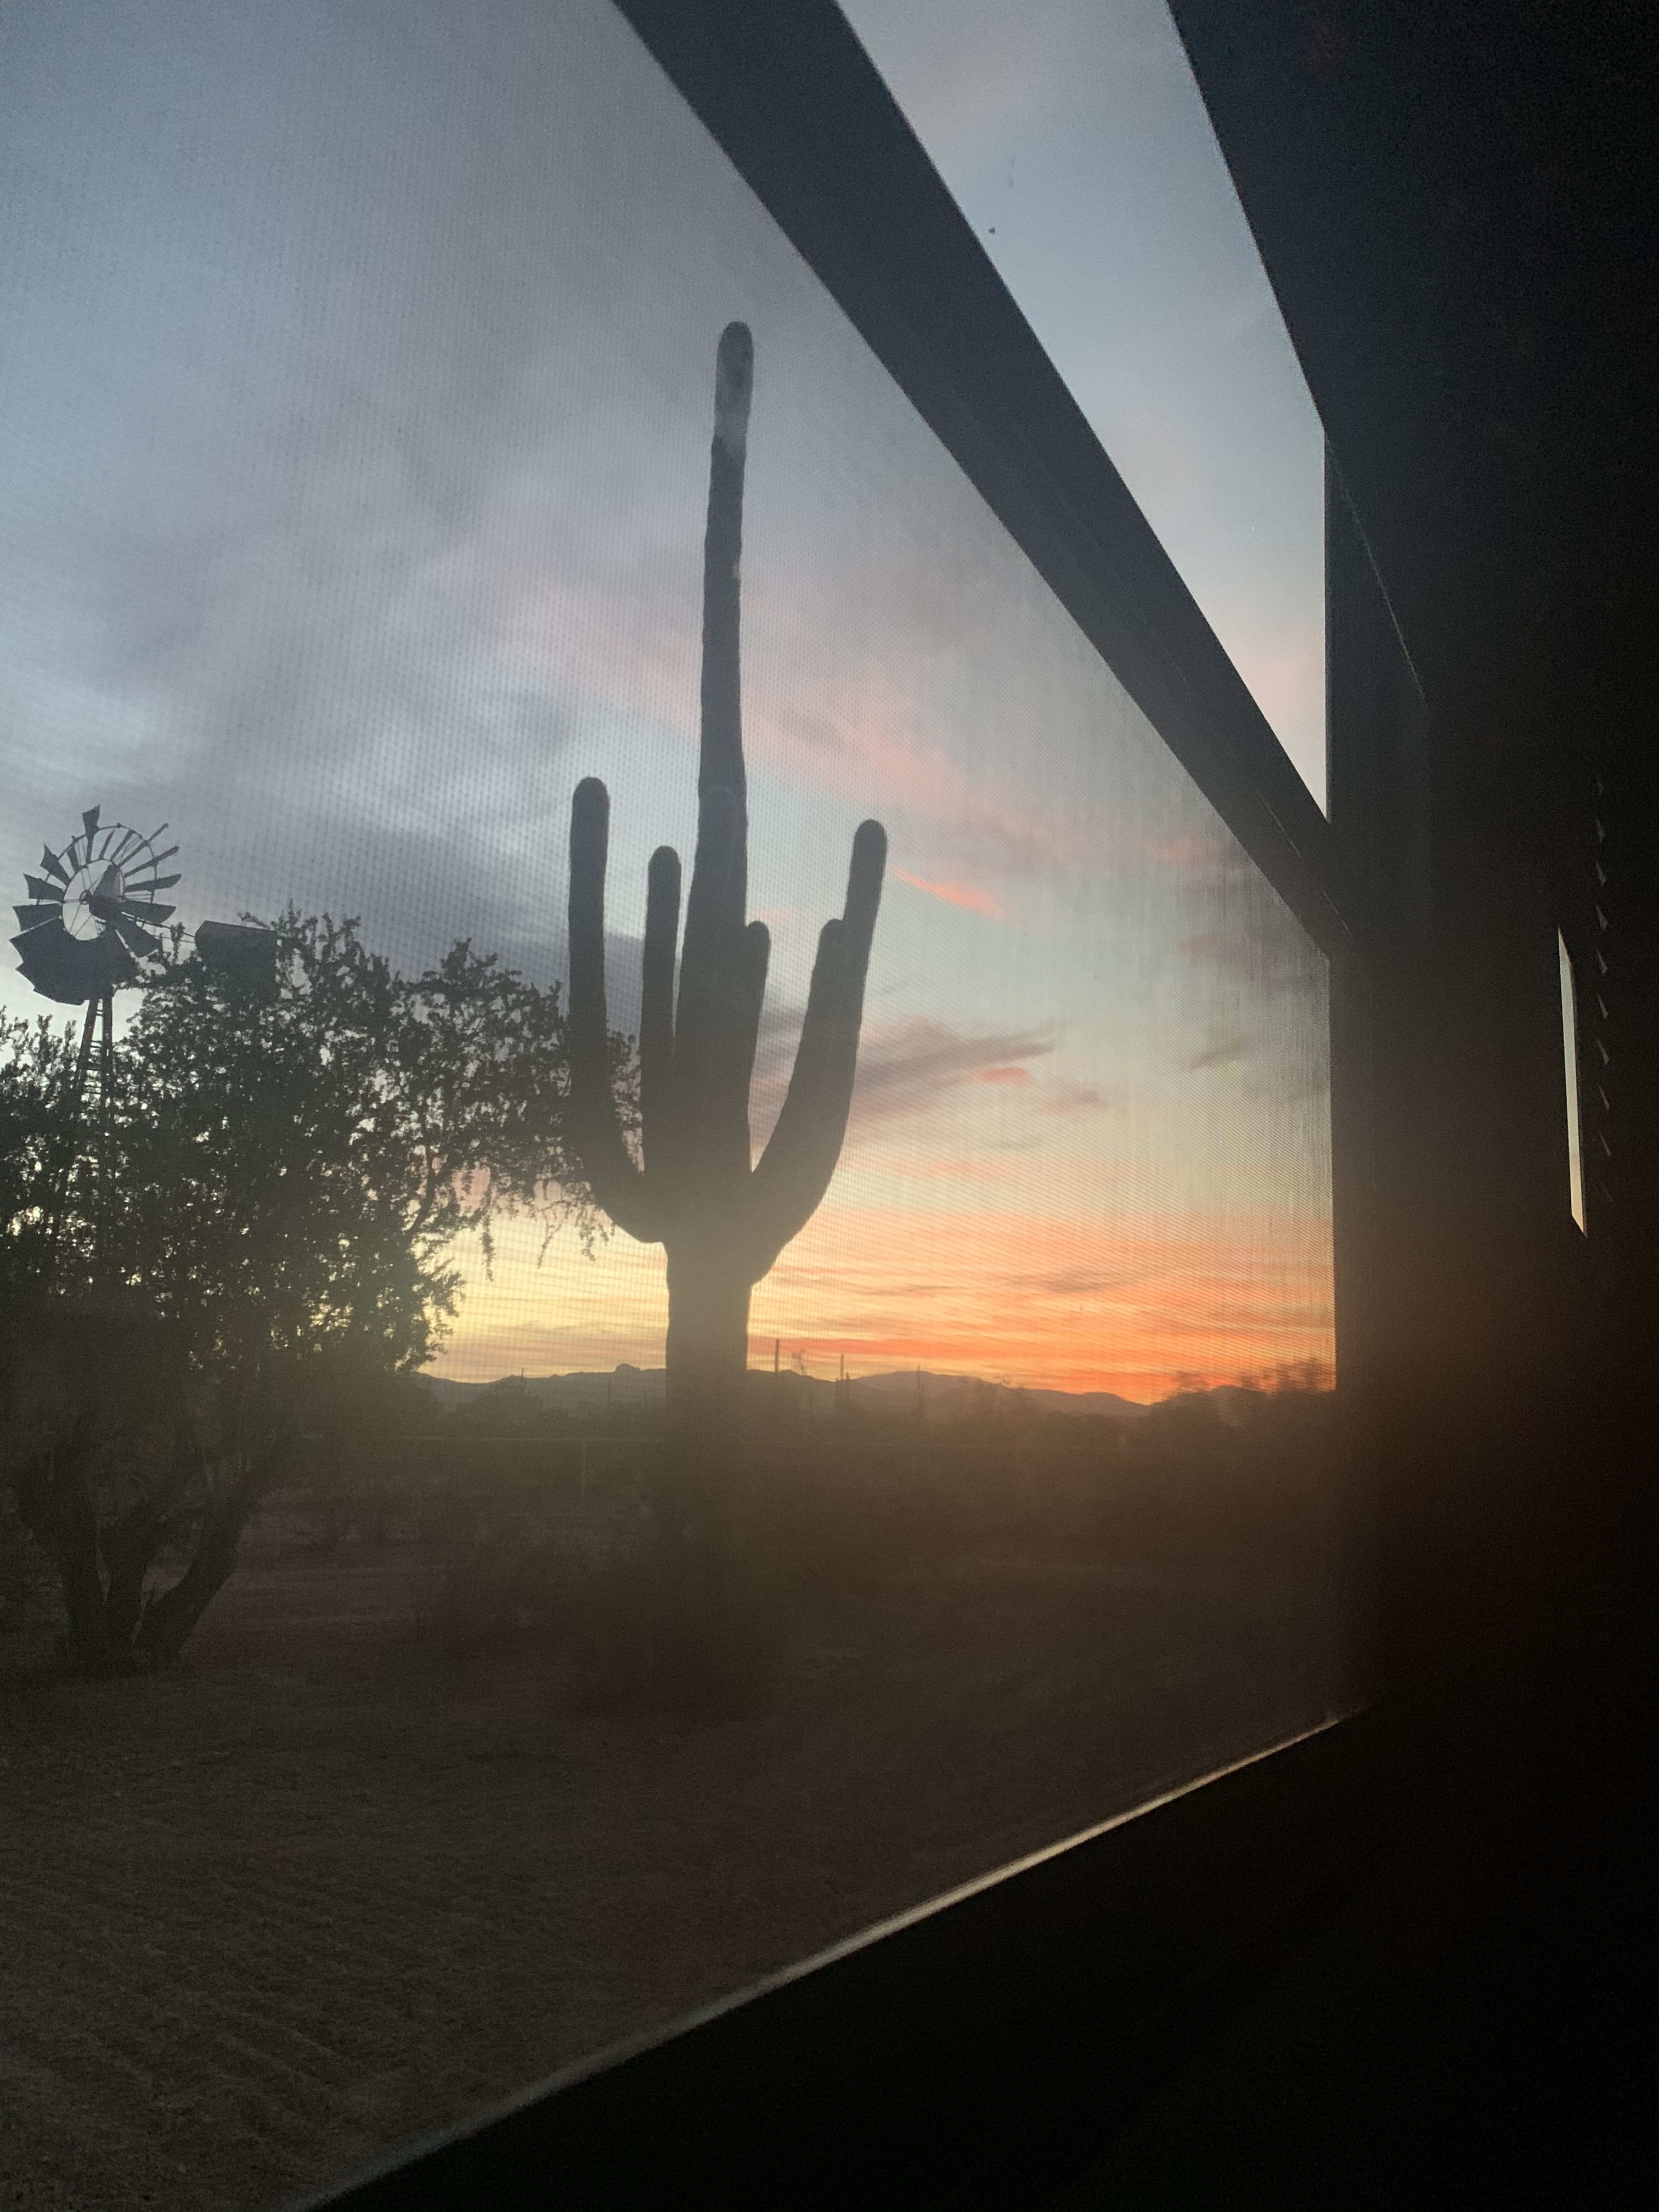 Watching the sunrise through the window